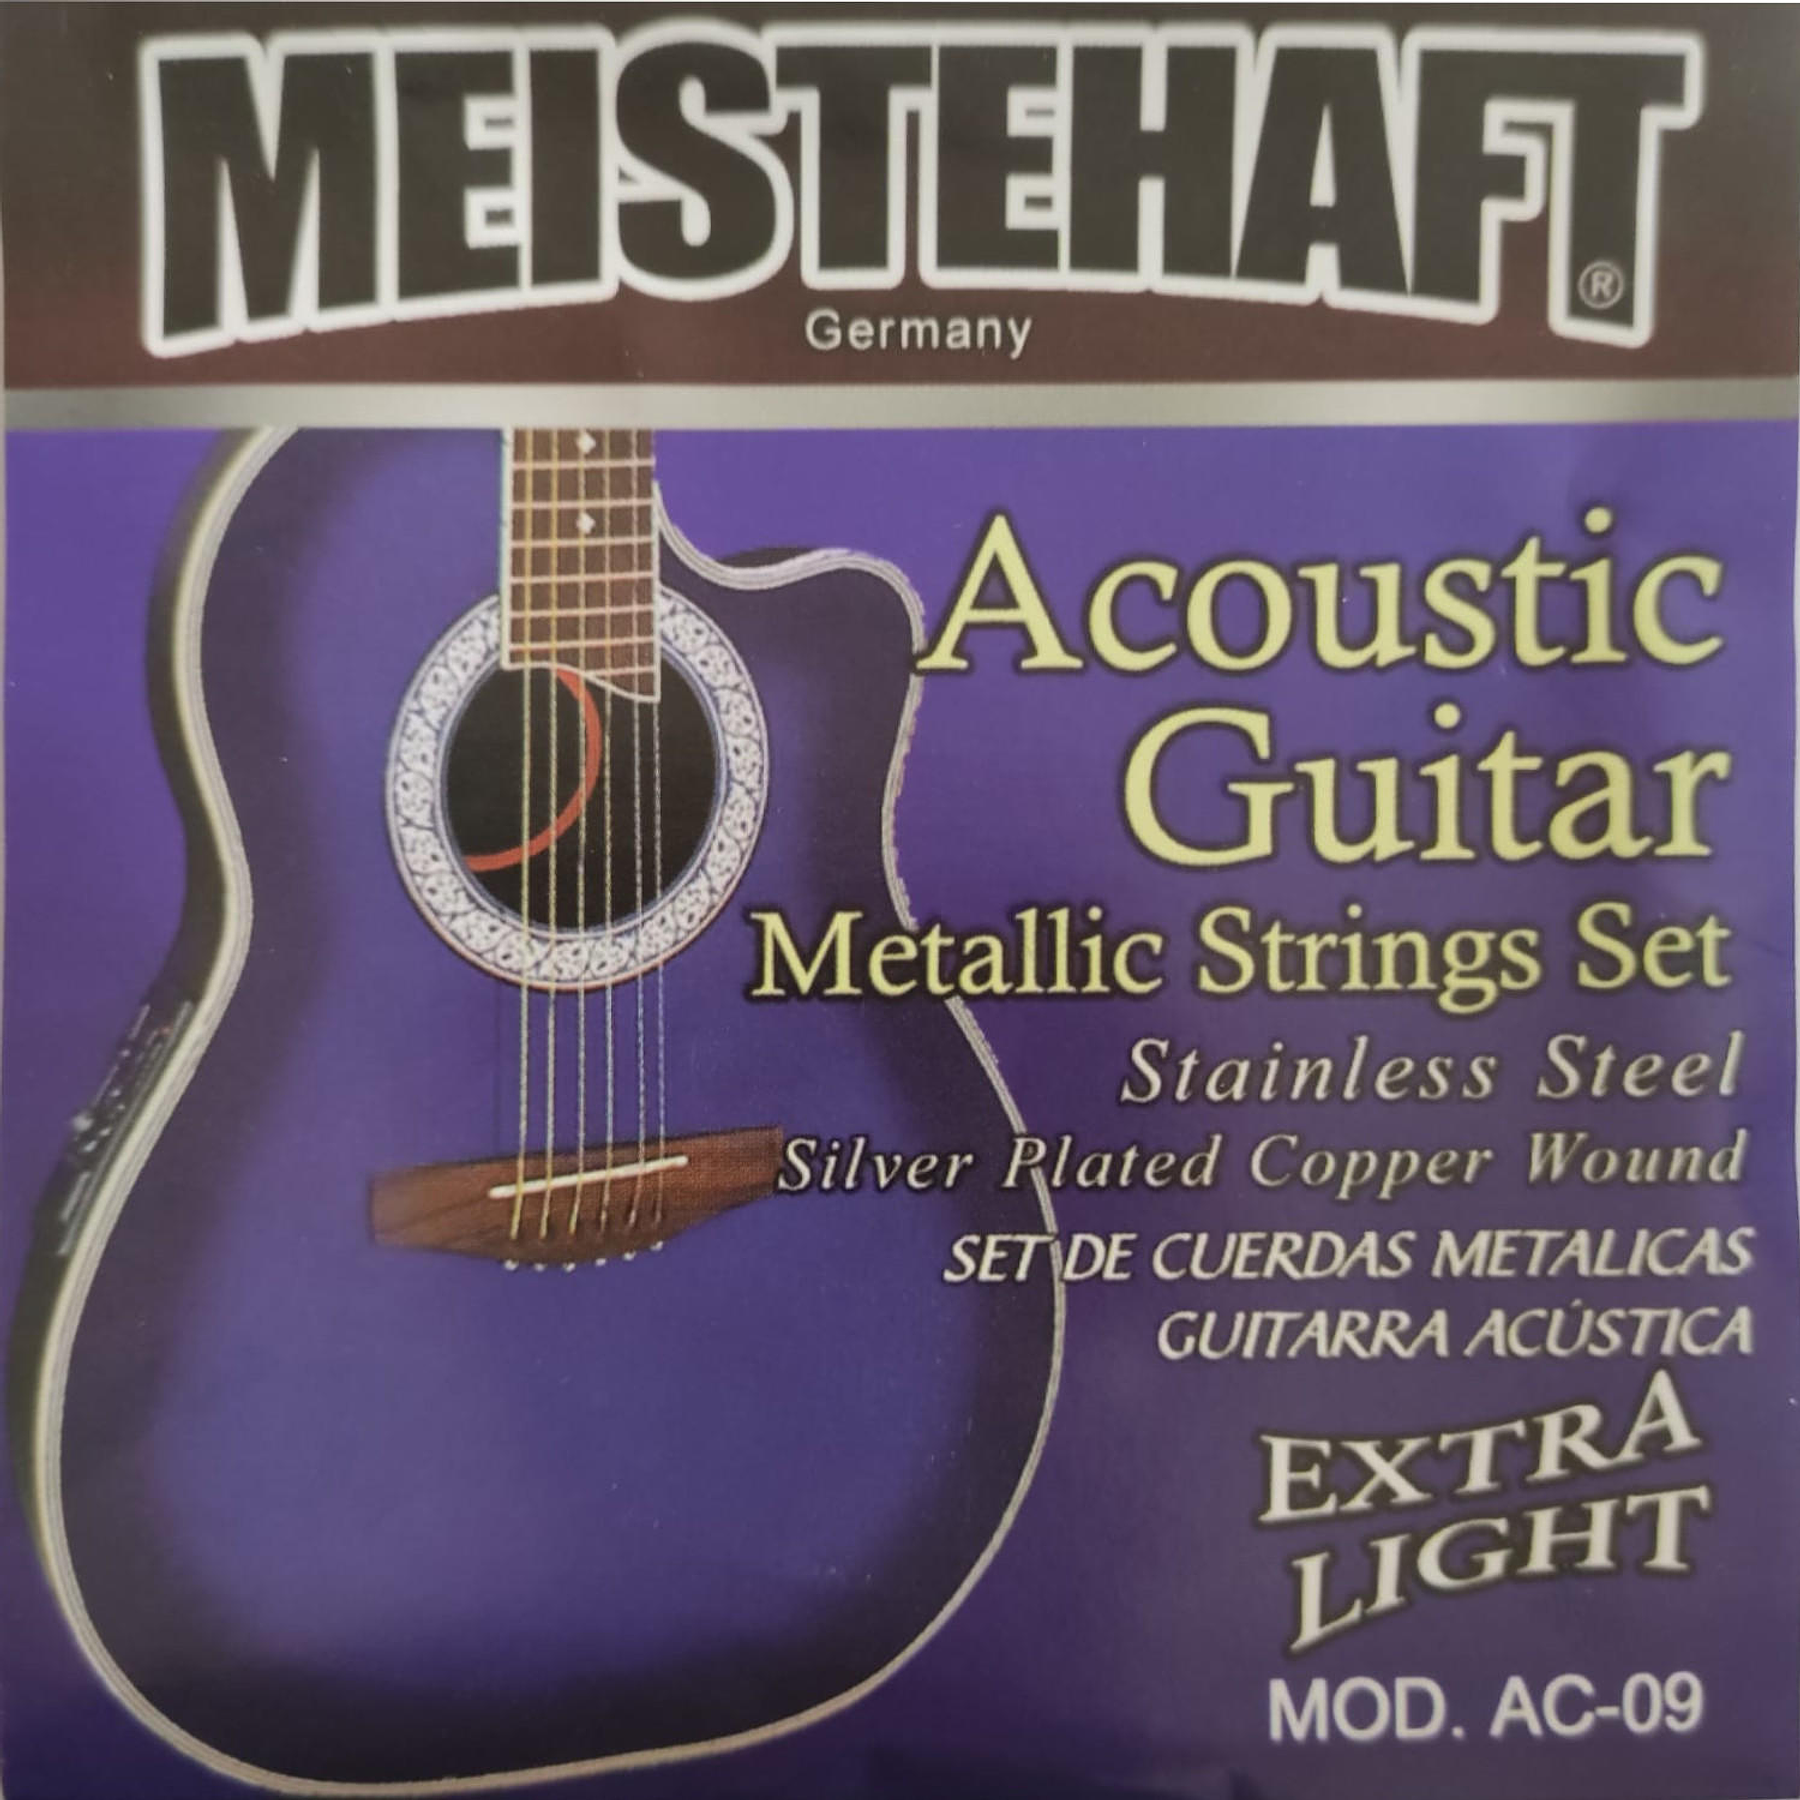 Cuerdas metalicas para guitarra acustica Meistehaft AC-09